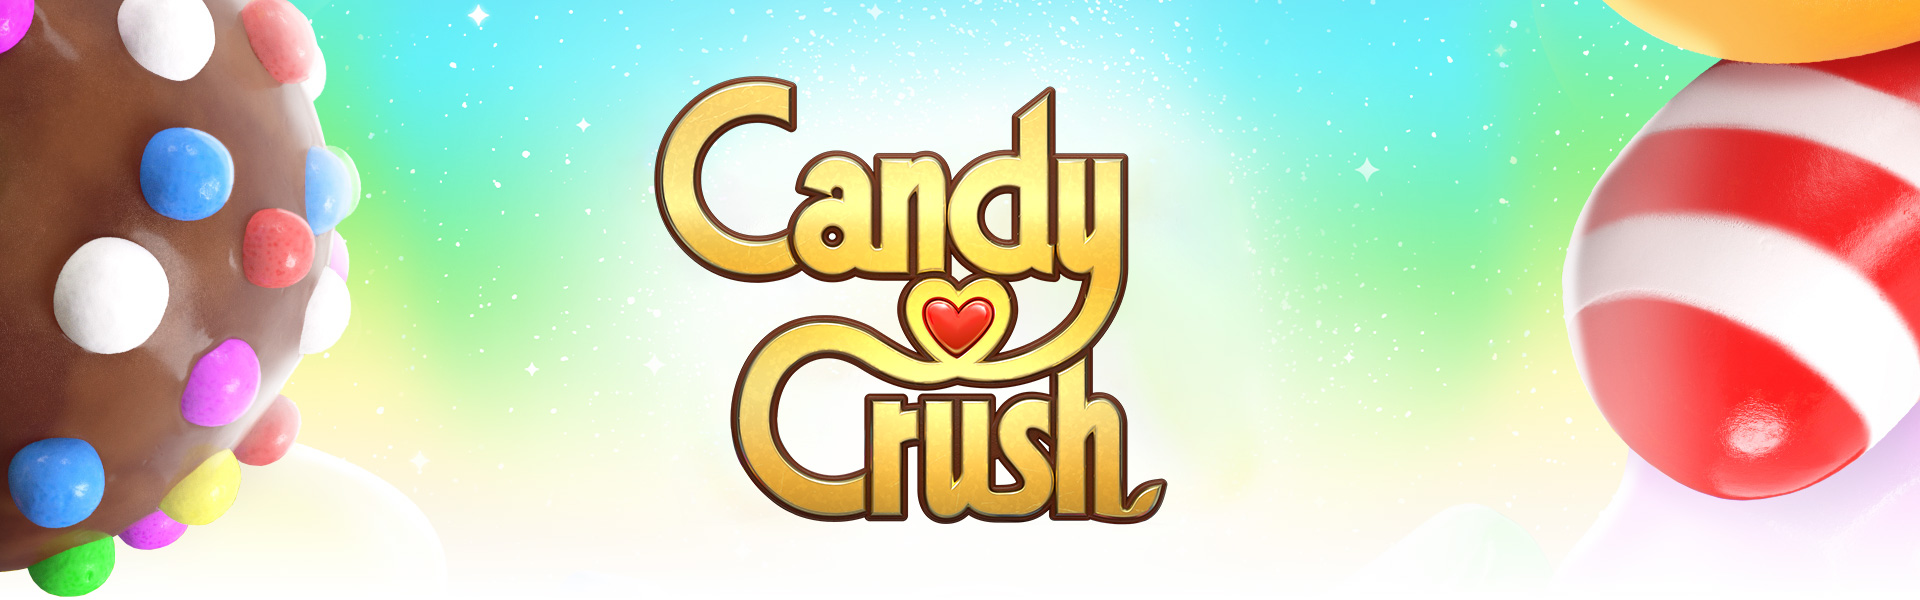 Logo di Candy Crush circondato da cioccolatini e caramelle